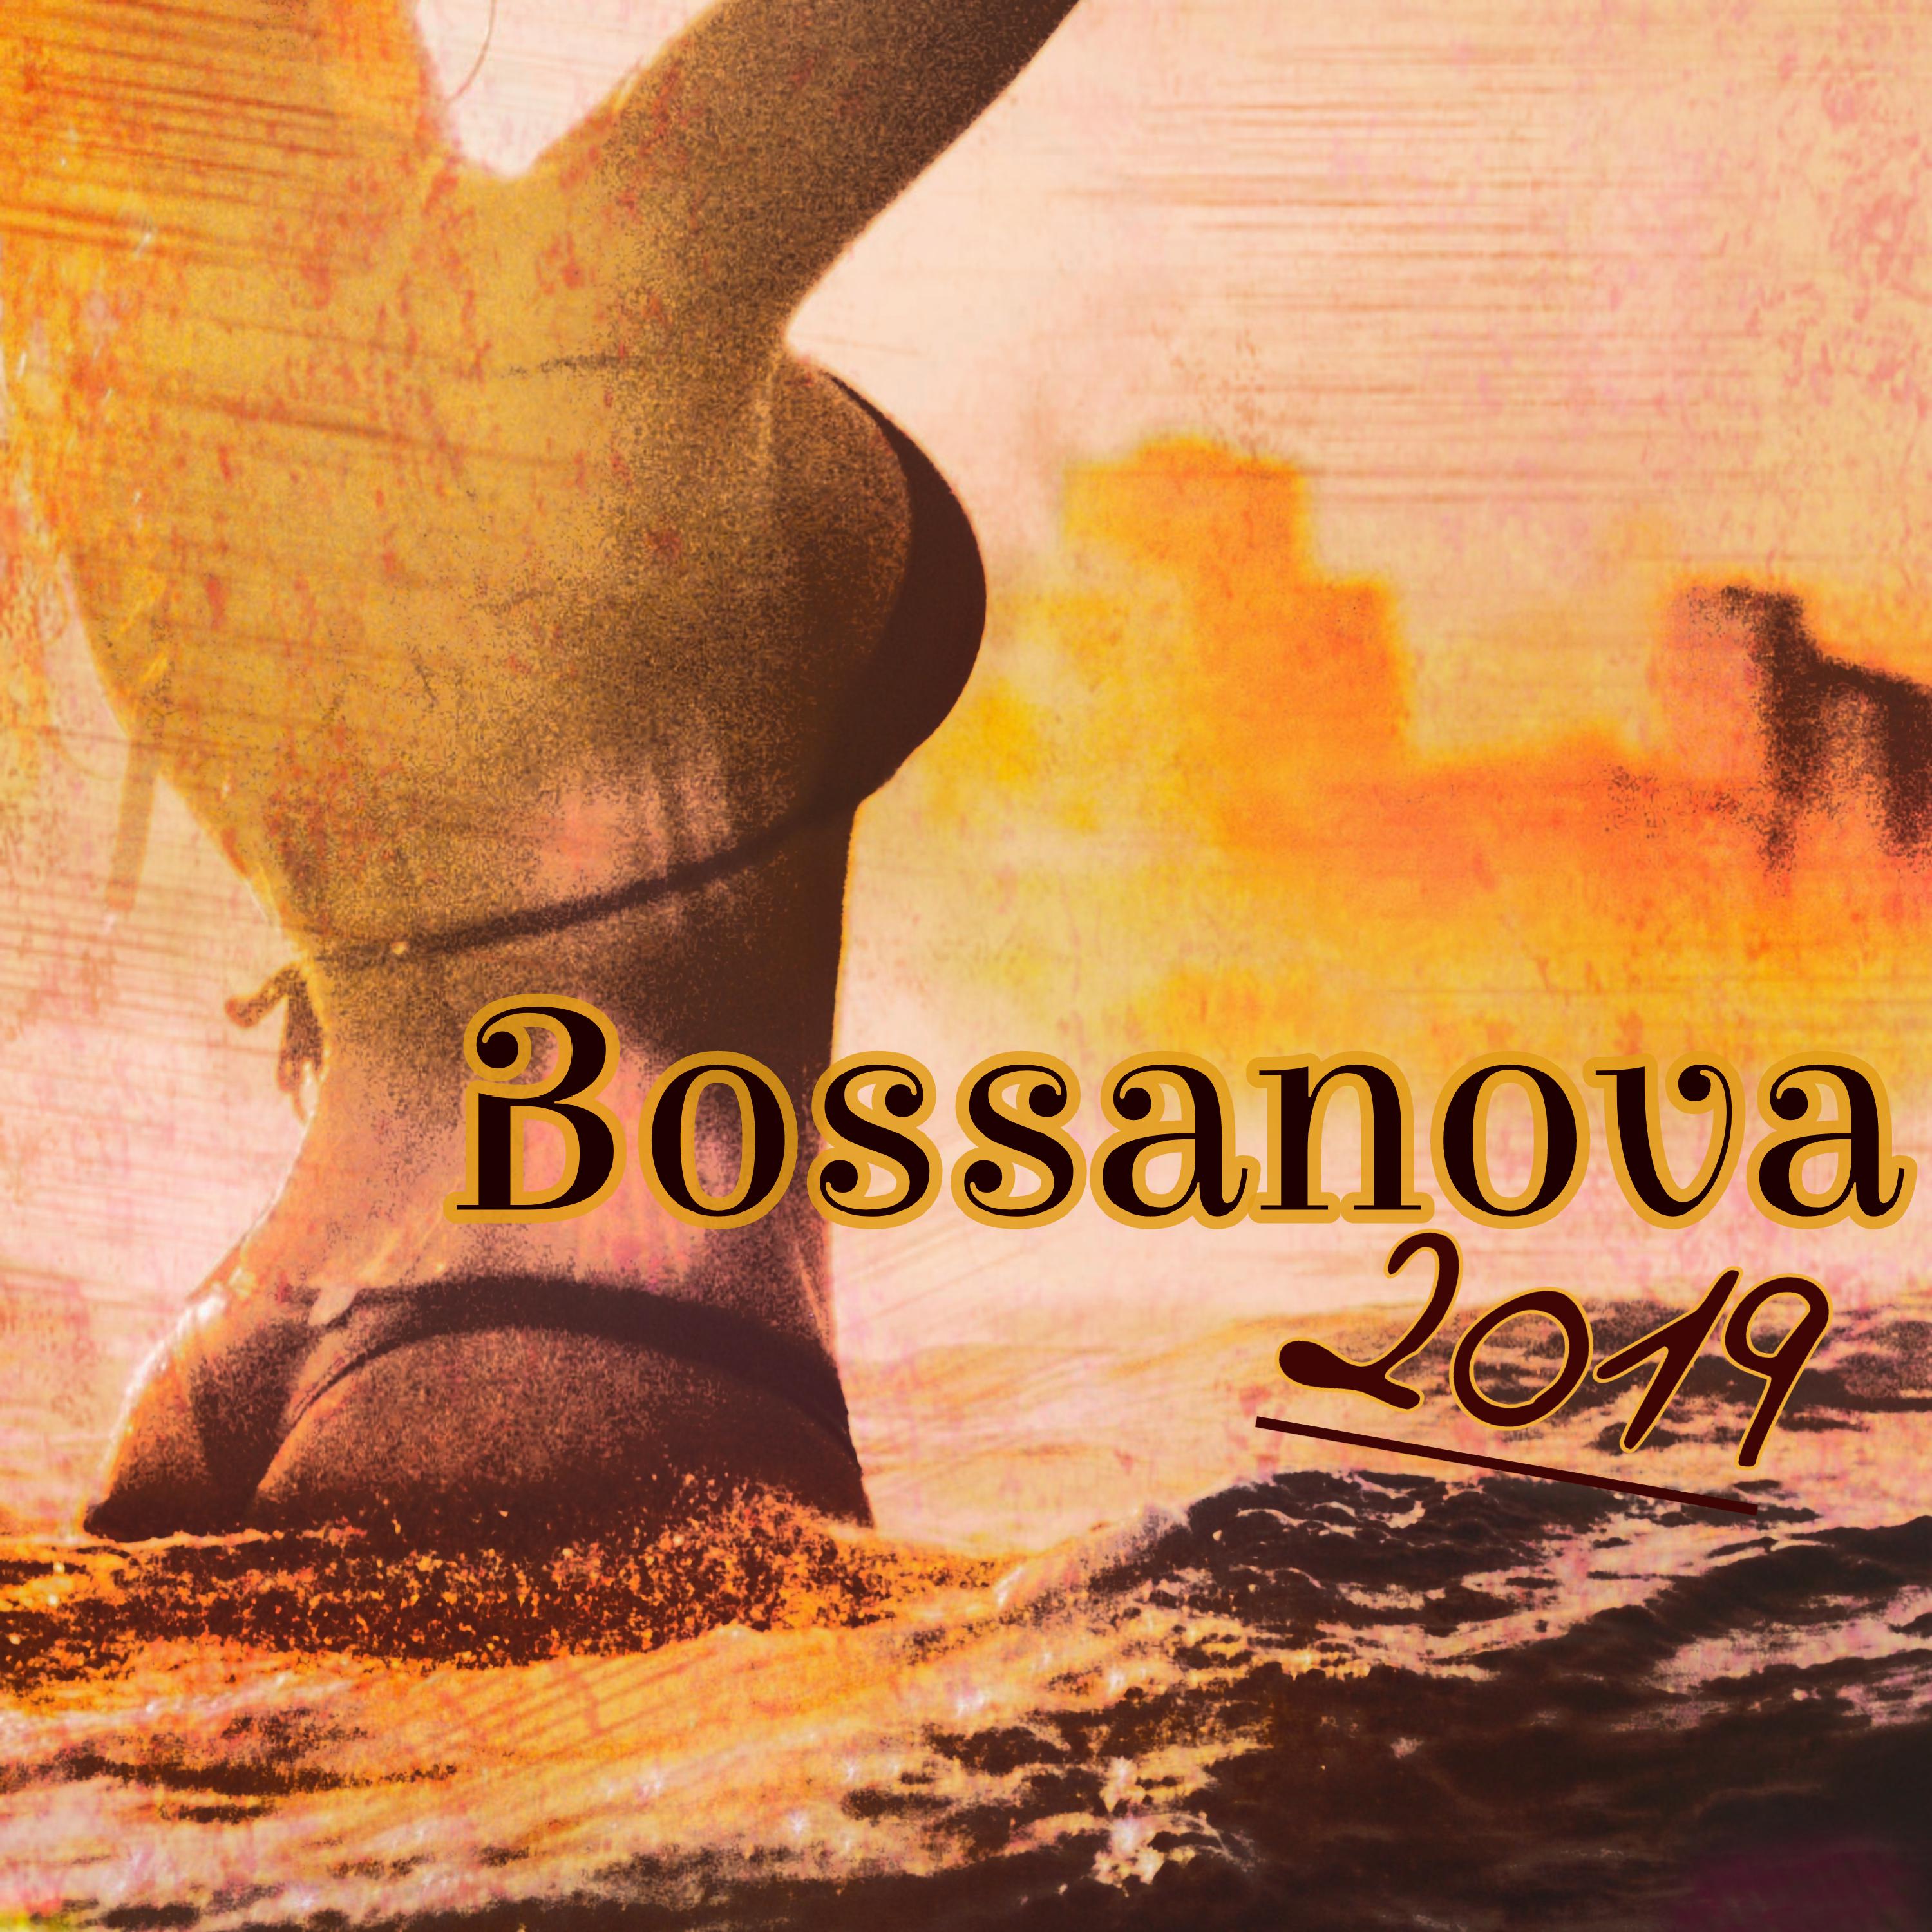 Bossanova Jazz